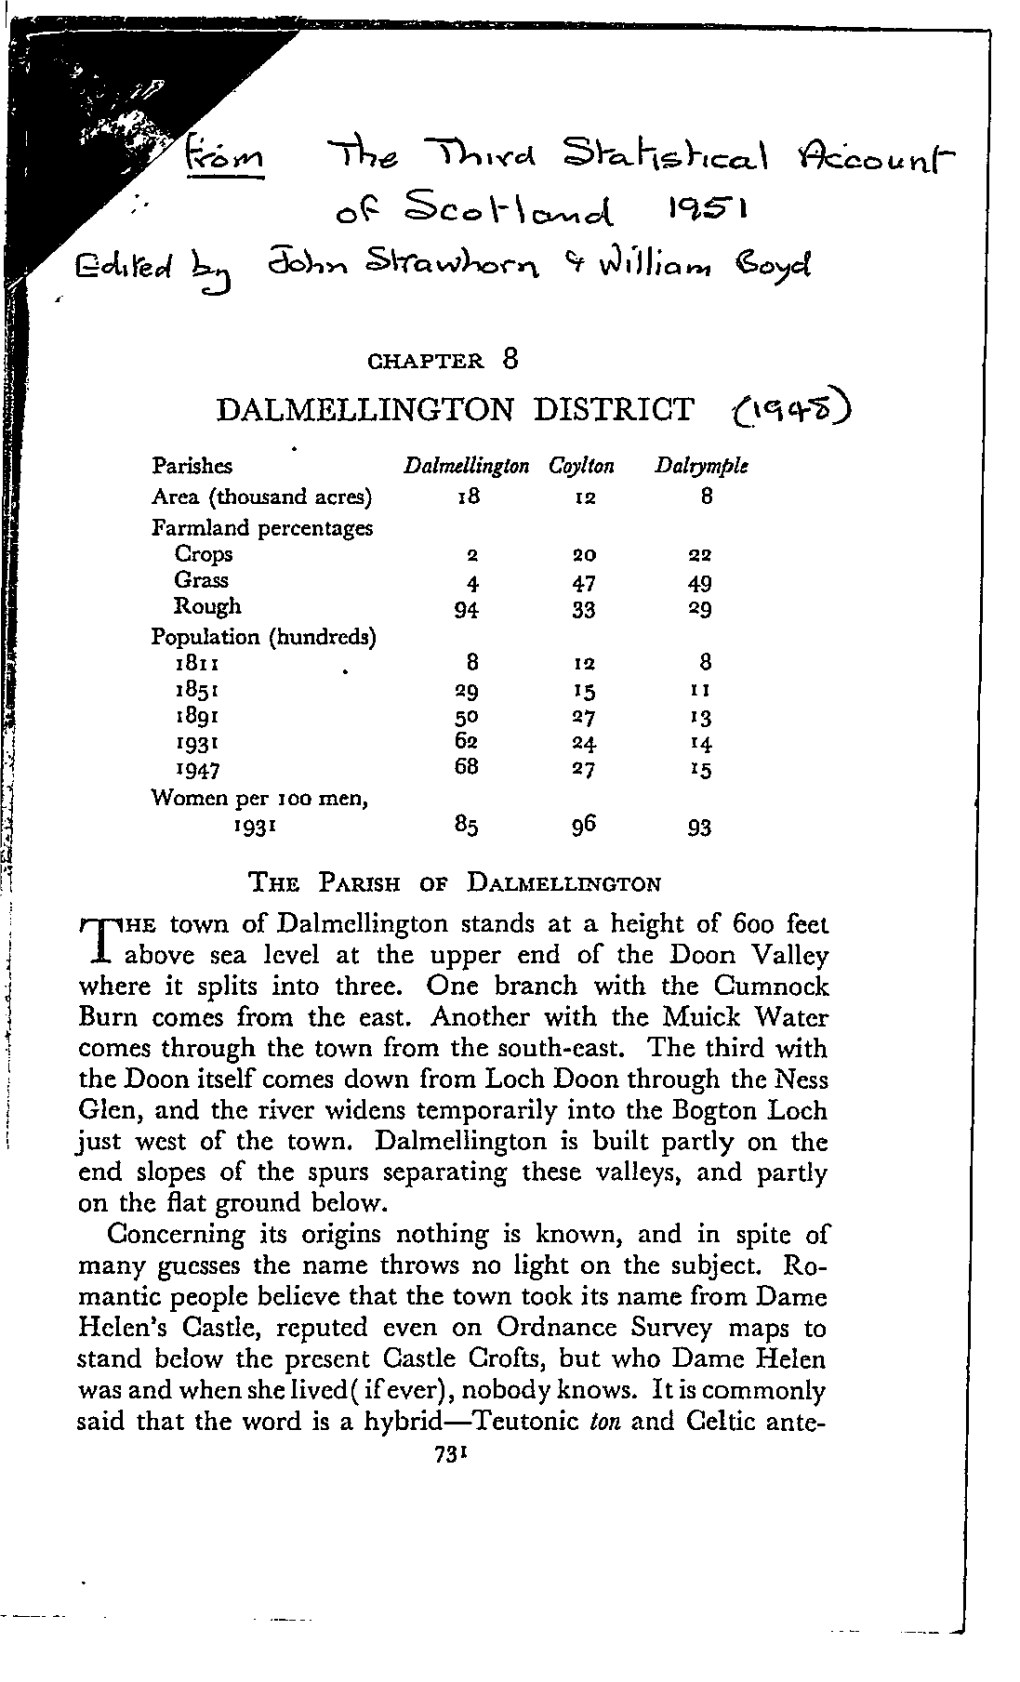 Dalmellington District -(M'fs)